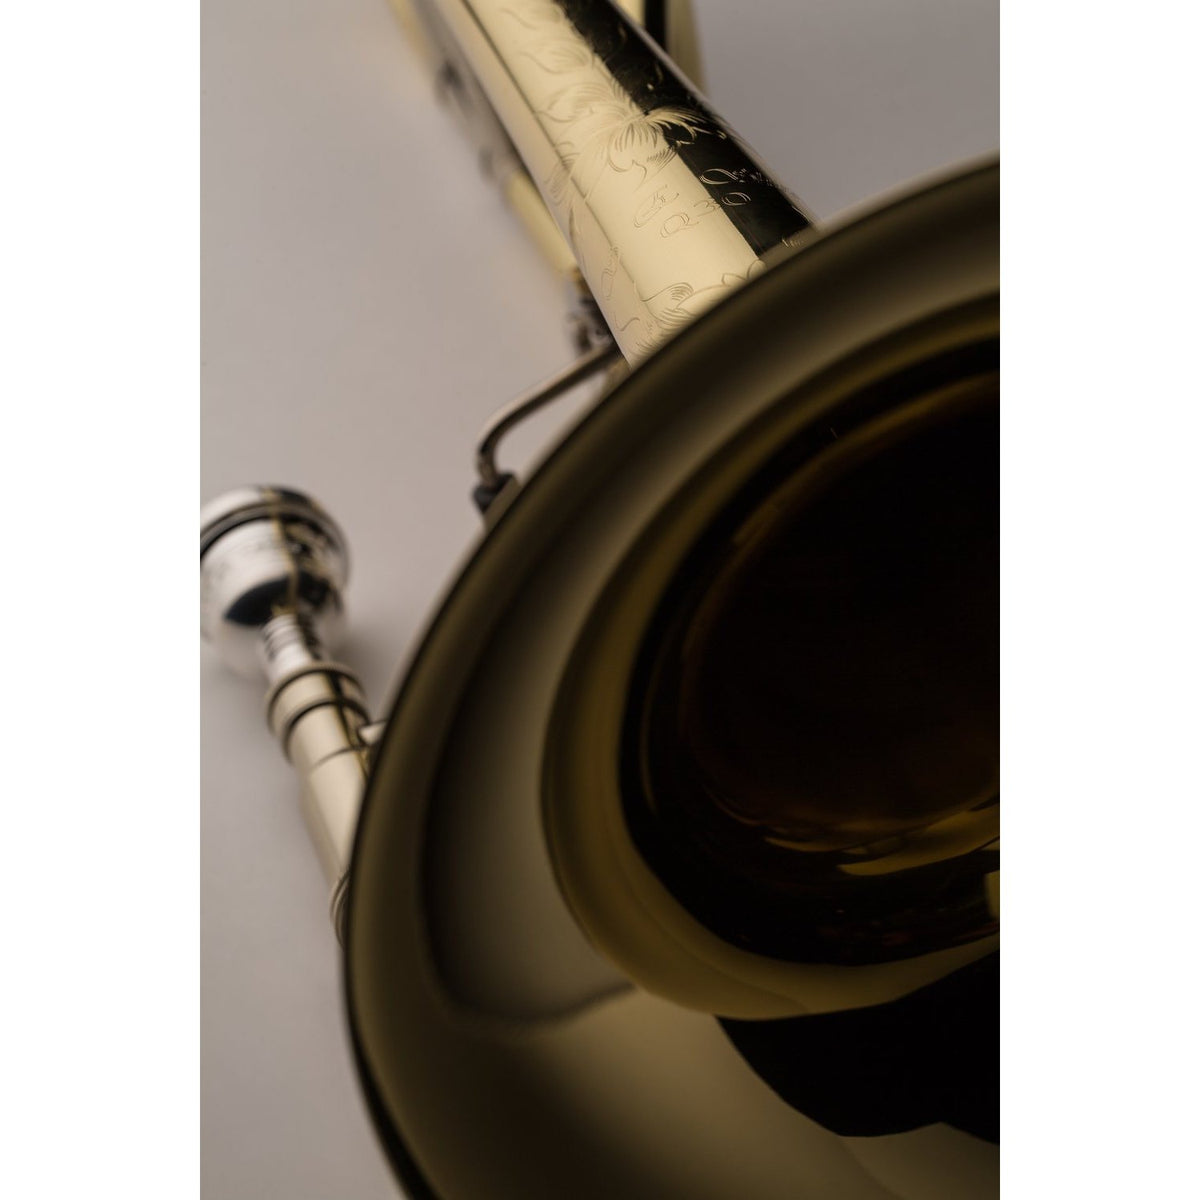 S.E. Shires - Q30YR - Q Series Large Bore Bb/F Tenor Trombone with Rotary Valve-Trombone-S.E. Shires-Music Elements